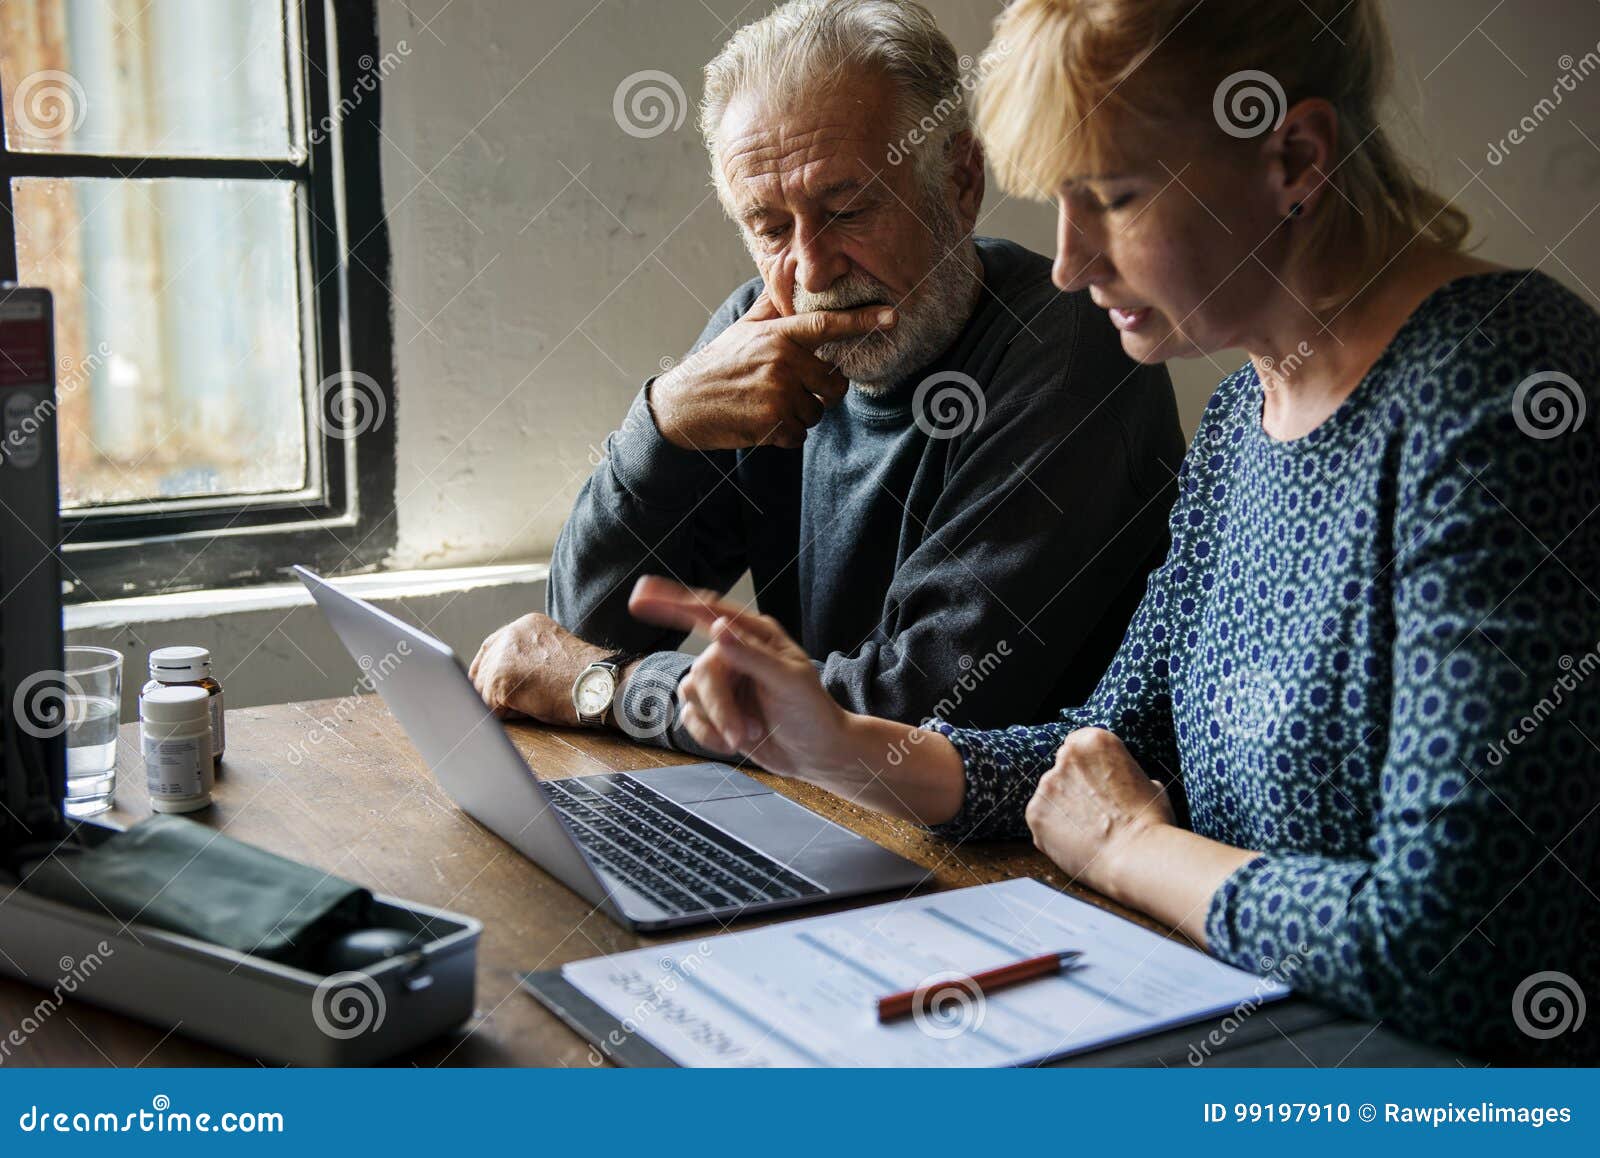 elderly couple planning on life insurance plan